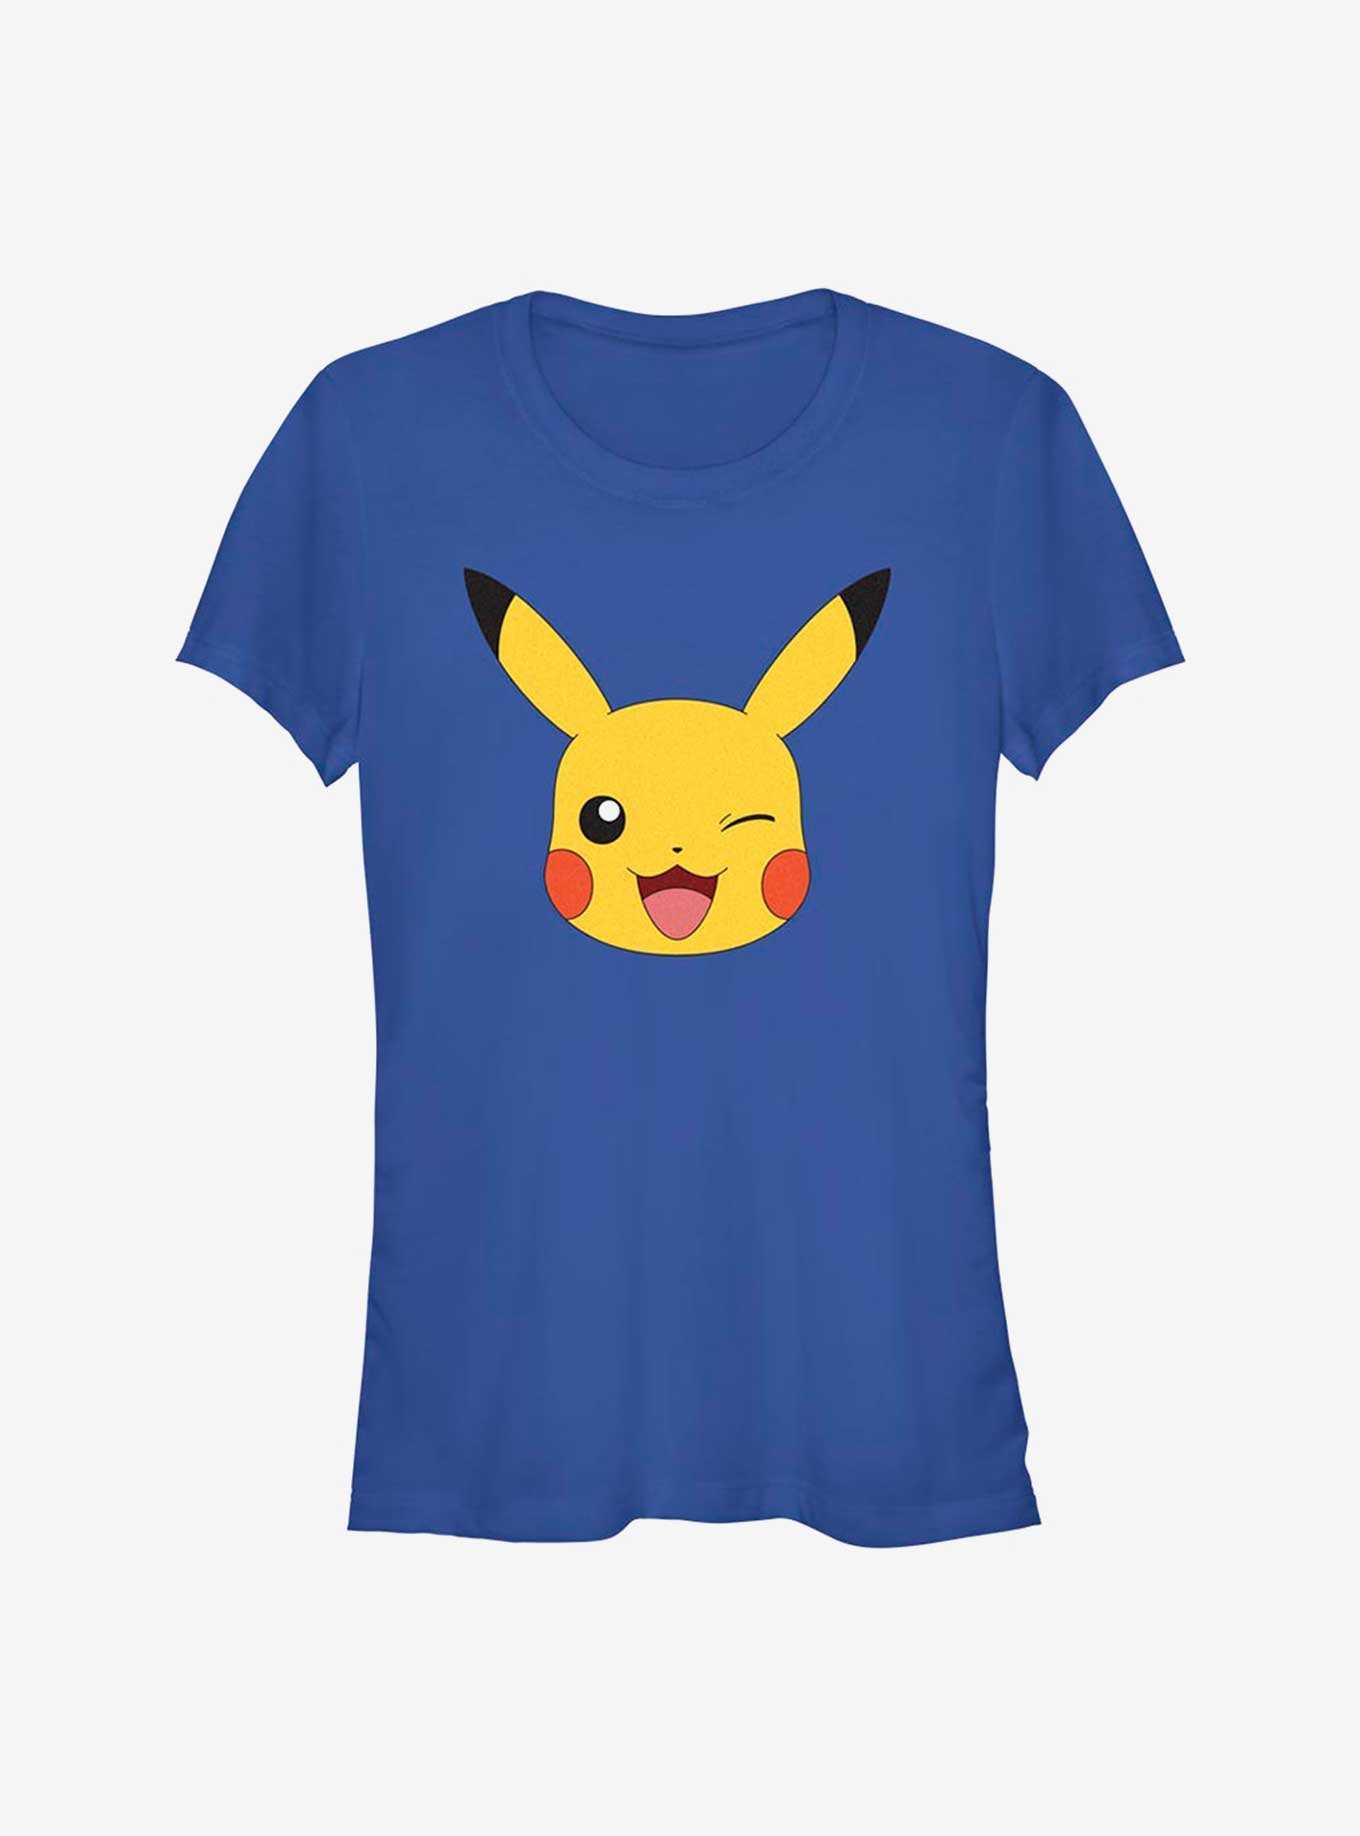 Pokemon Pikachu Big Face Girls T-Shirt, , hi-res